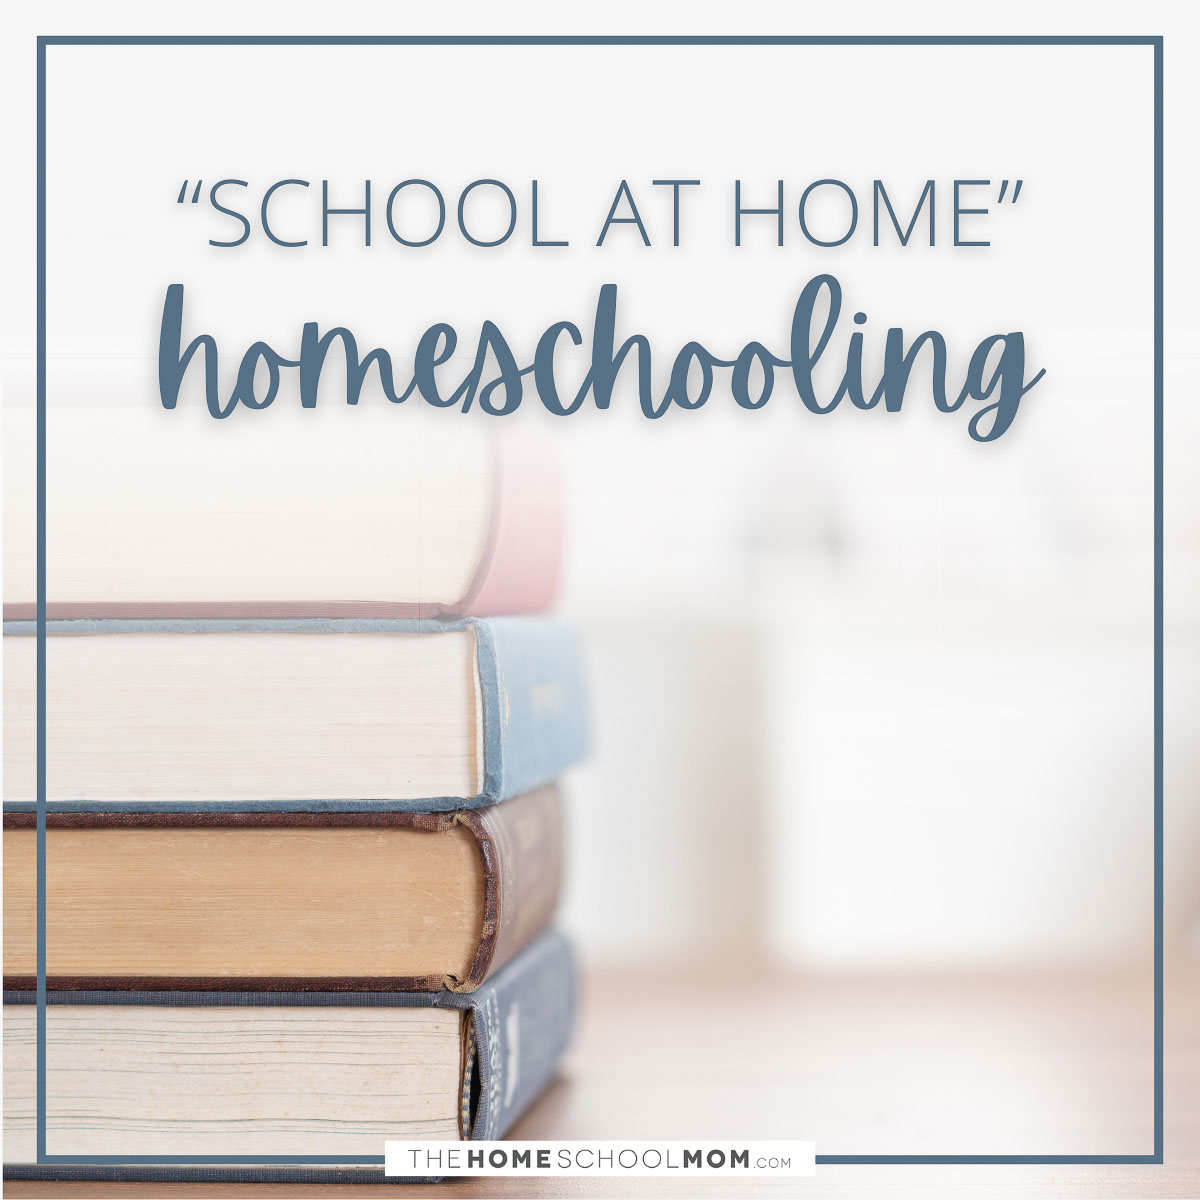 School at home homeschooling.